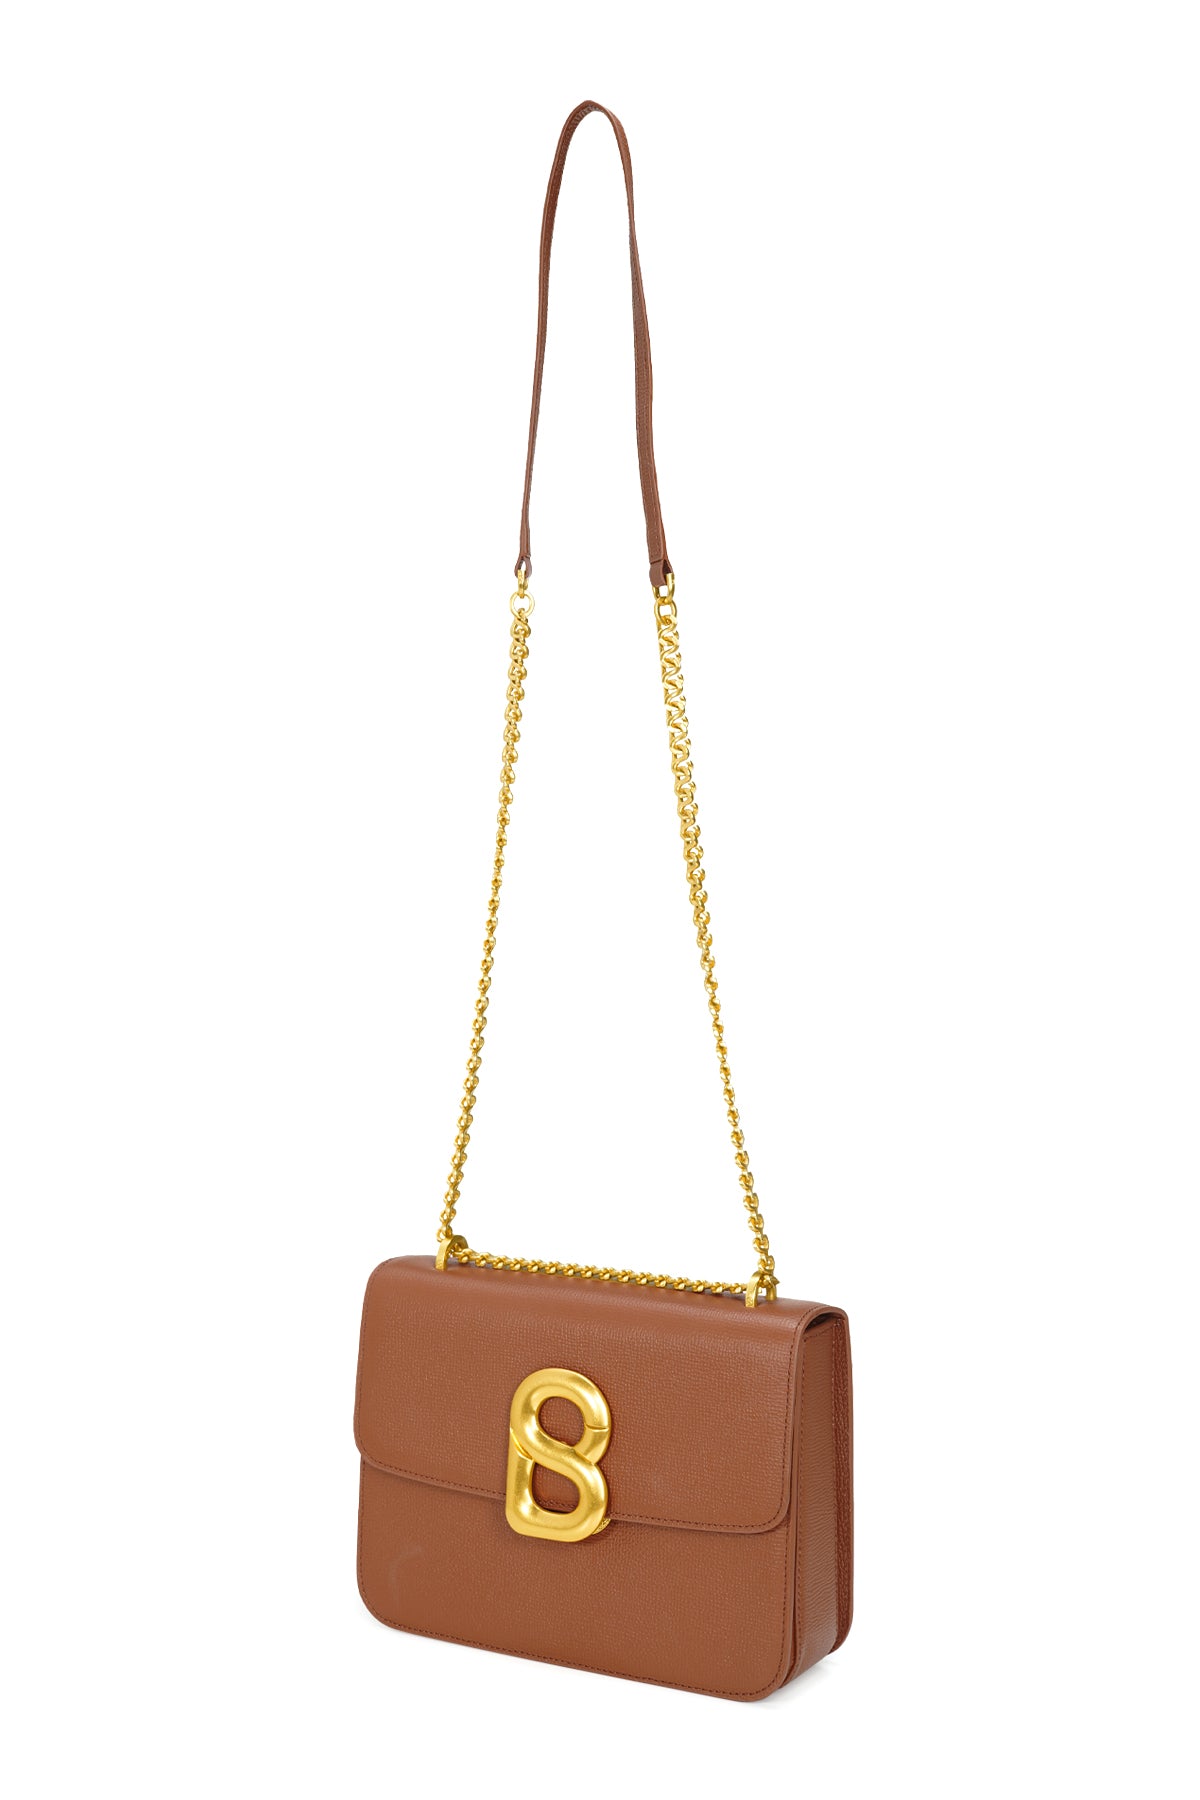 Audrey Chain Leather Bag  Medium - Caramel